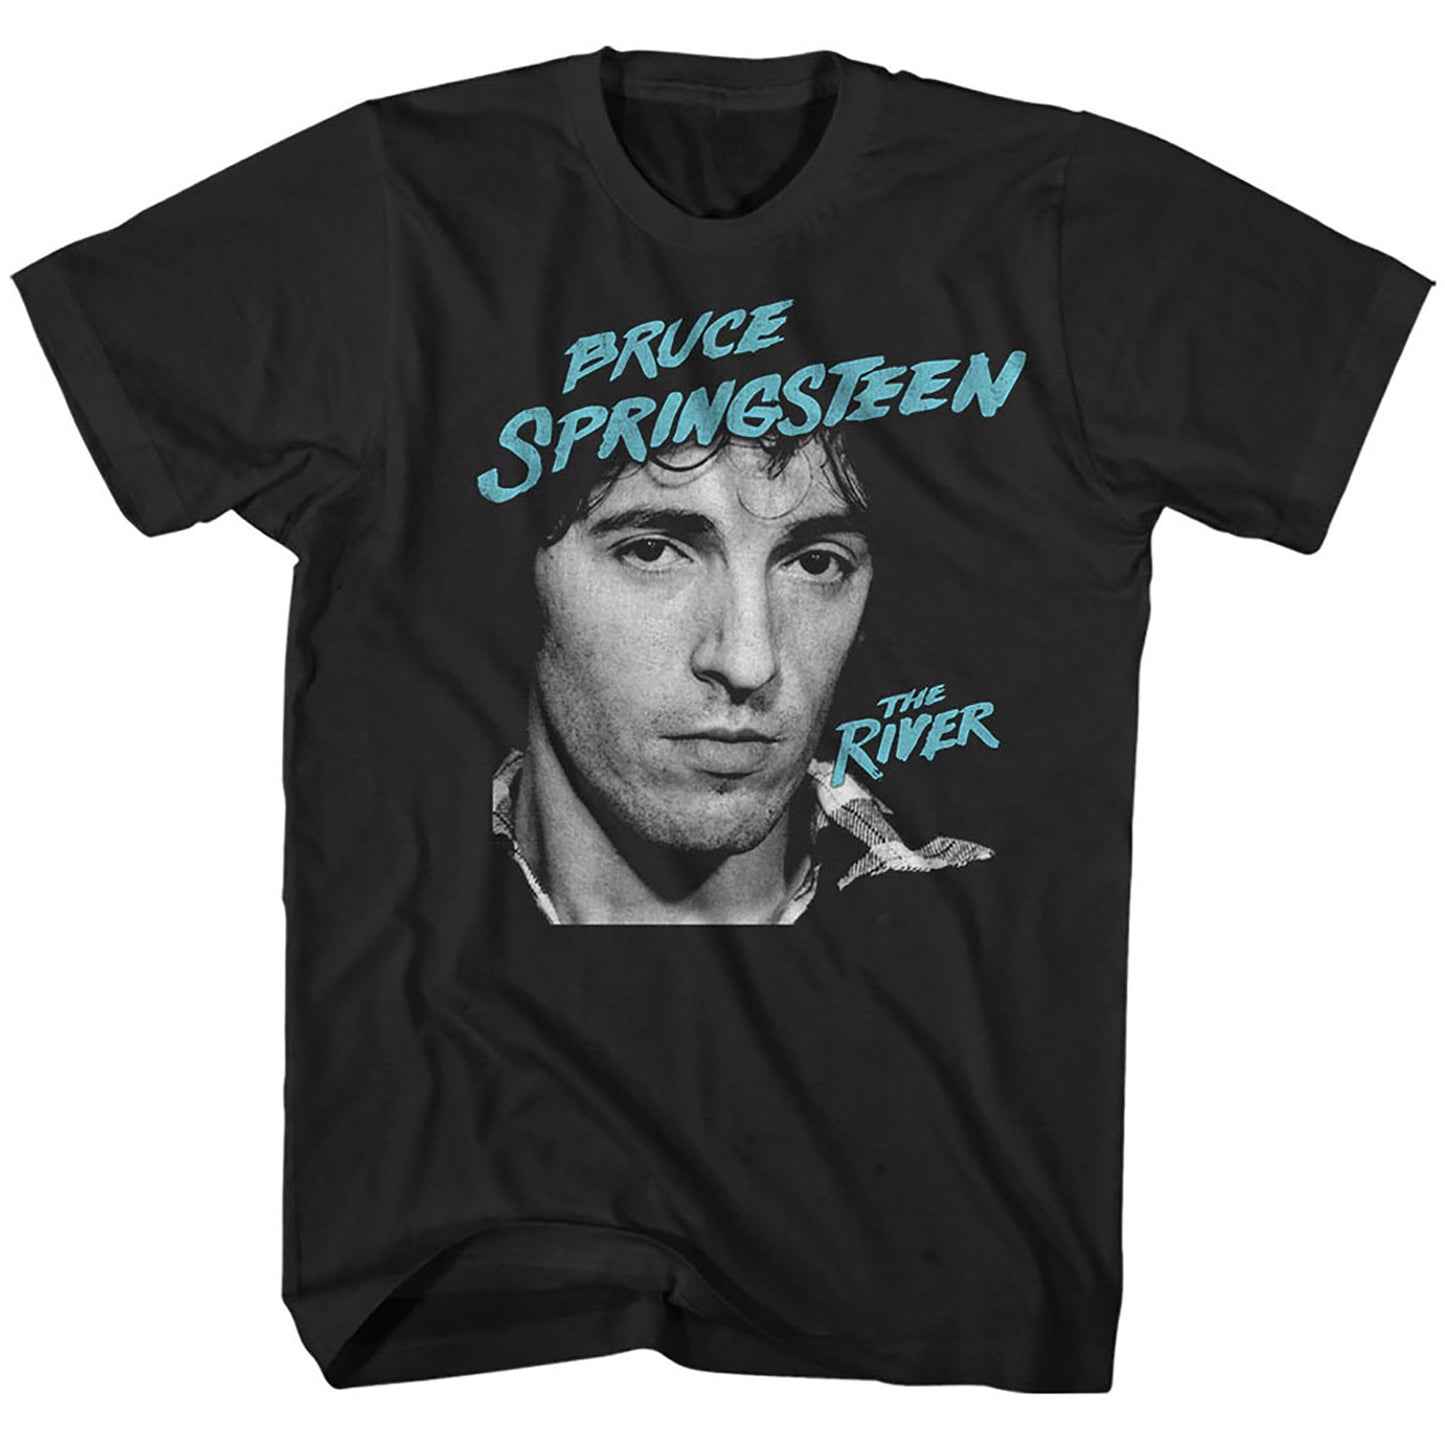 Bruce Springsteen T-Shirt: River 2016